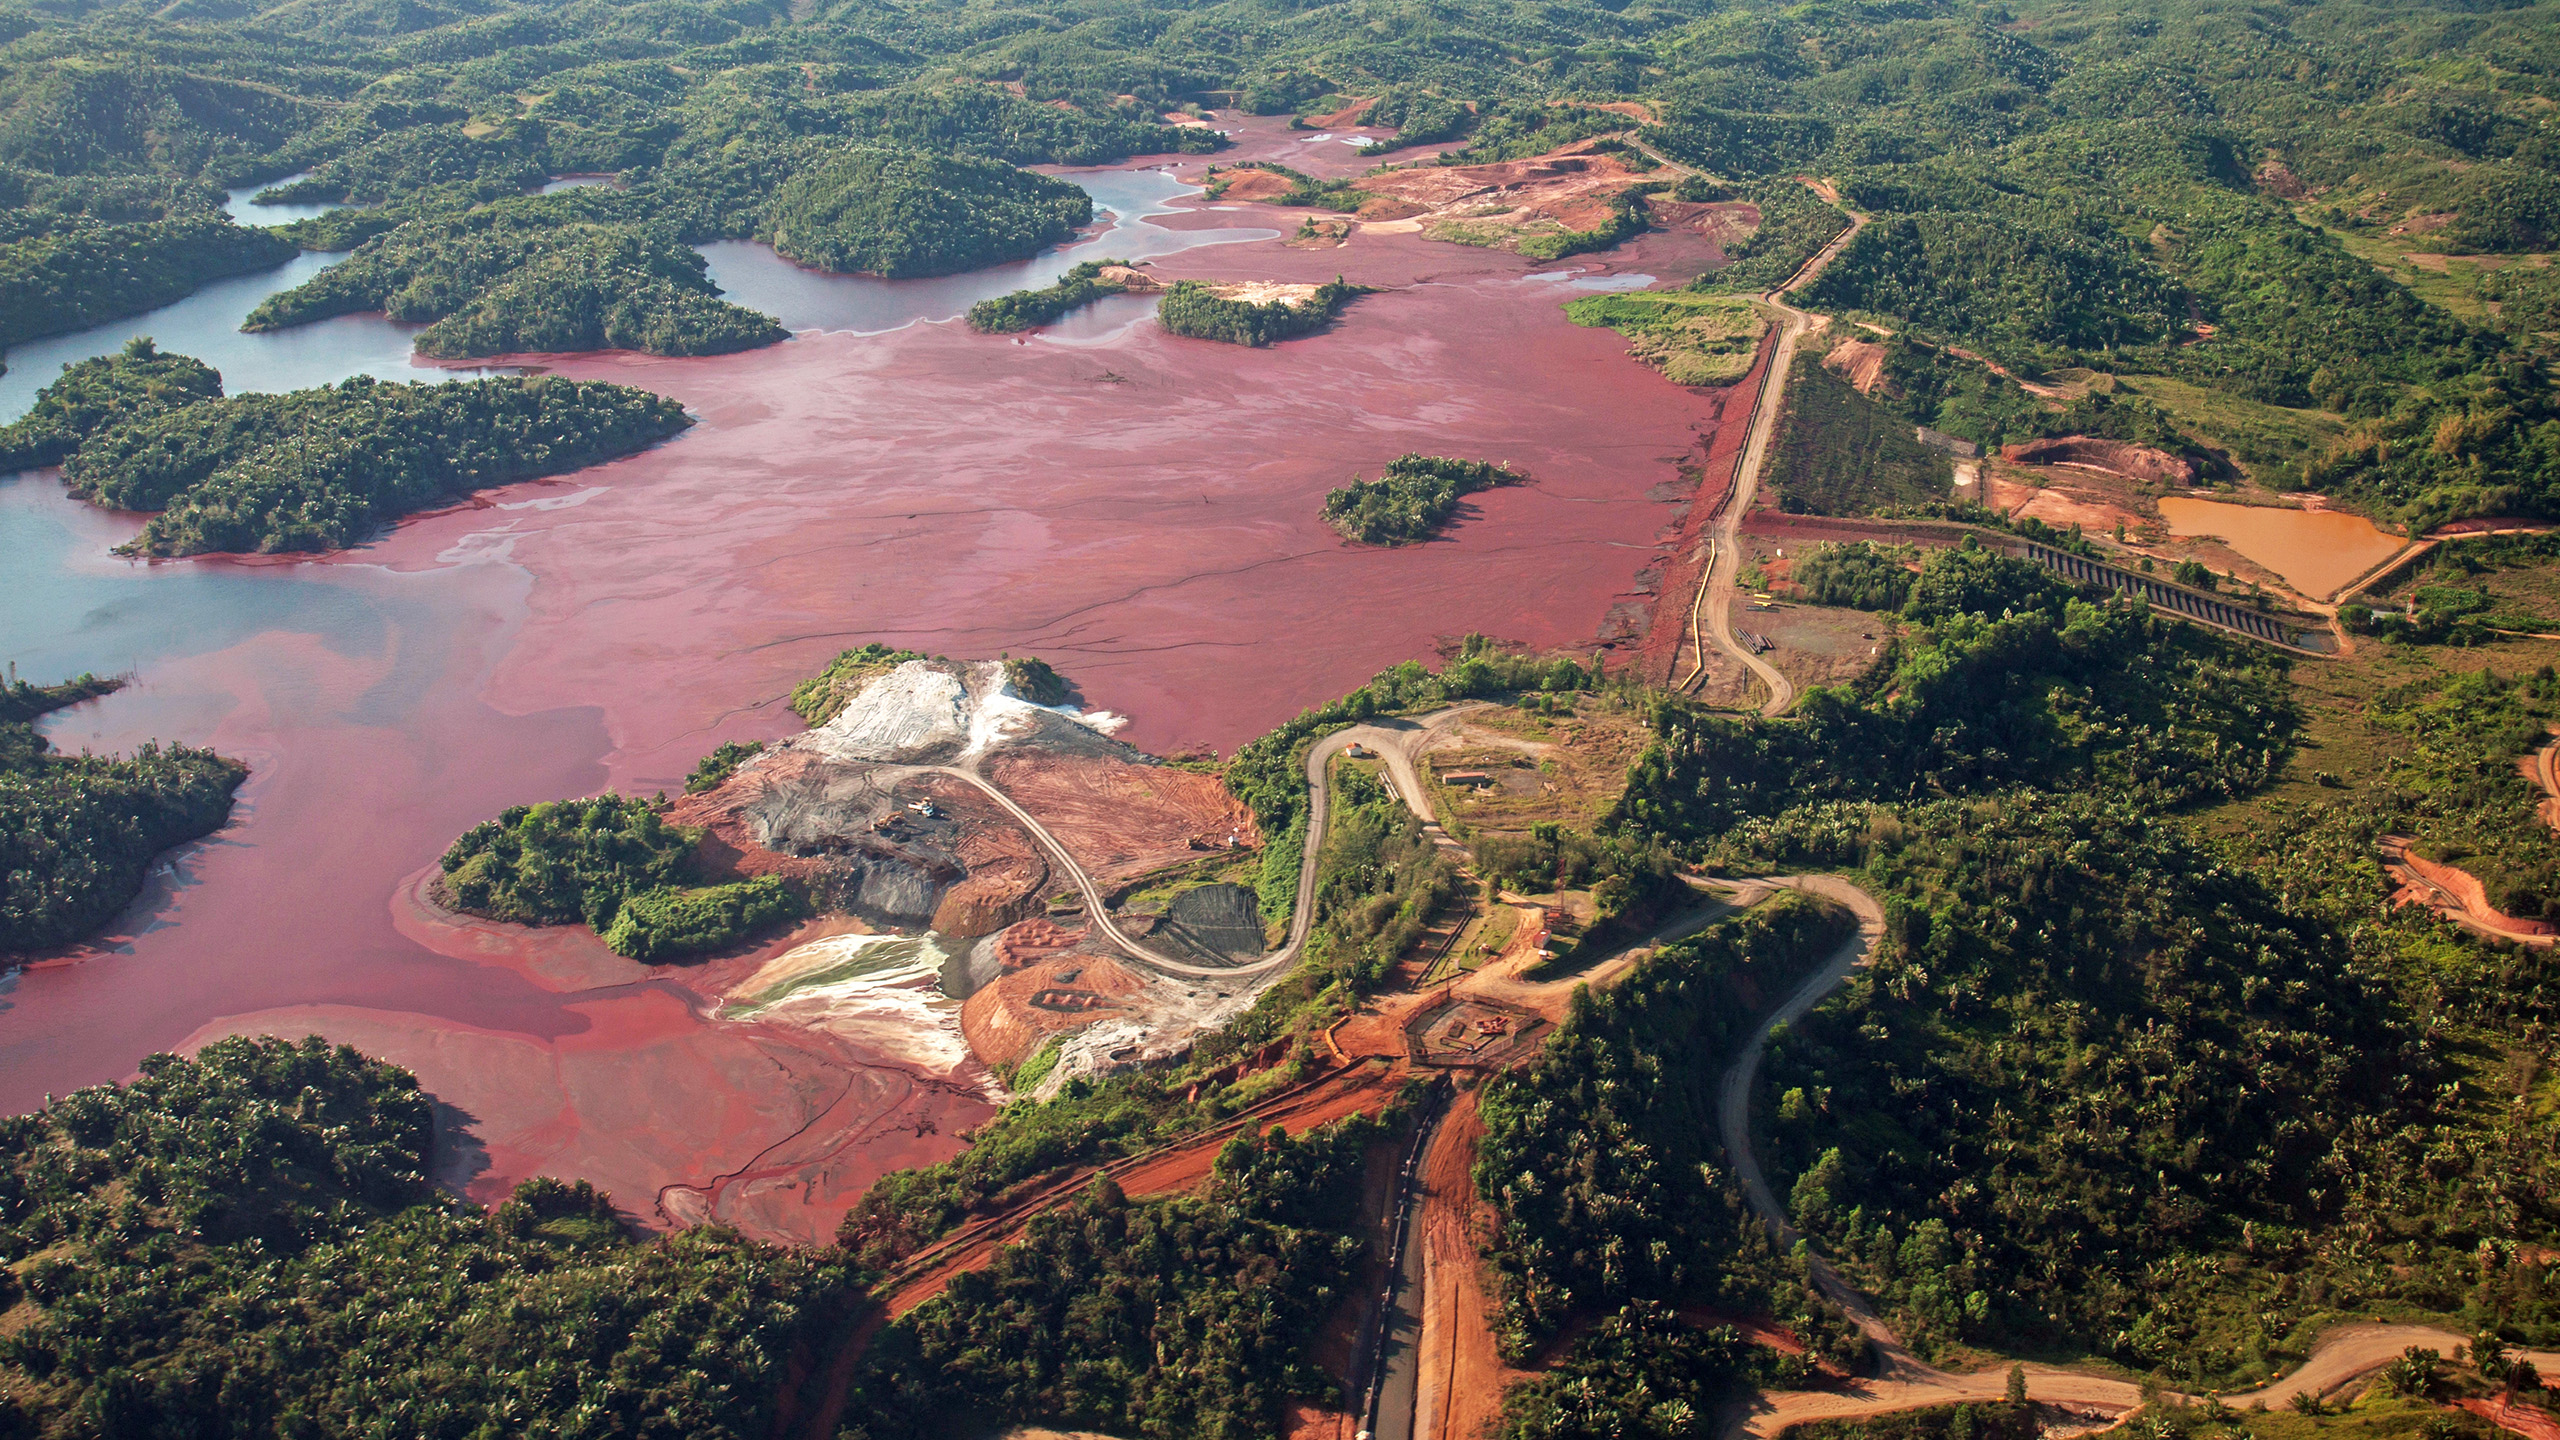 No more room for fish - massive pollution from mining activities | Wirestock Creators/Shutterstock